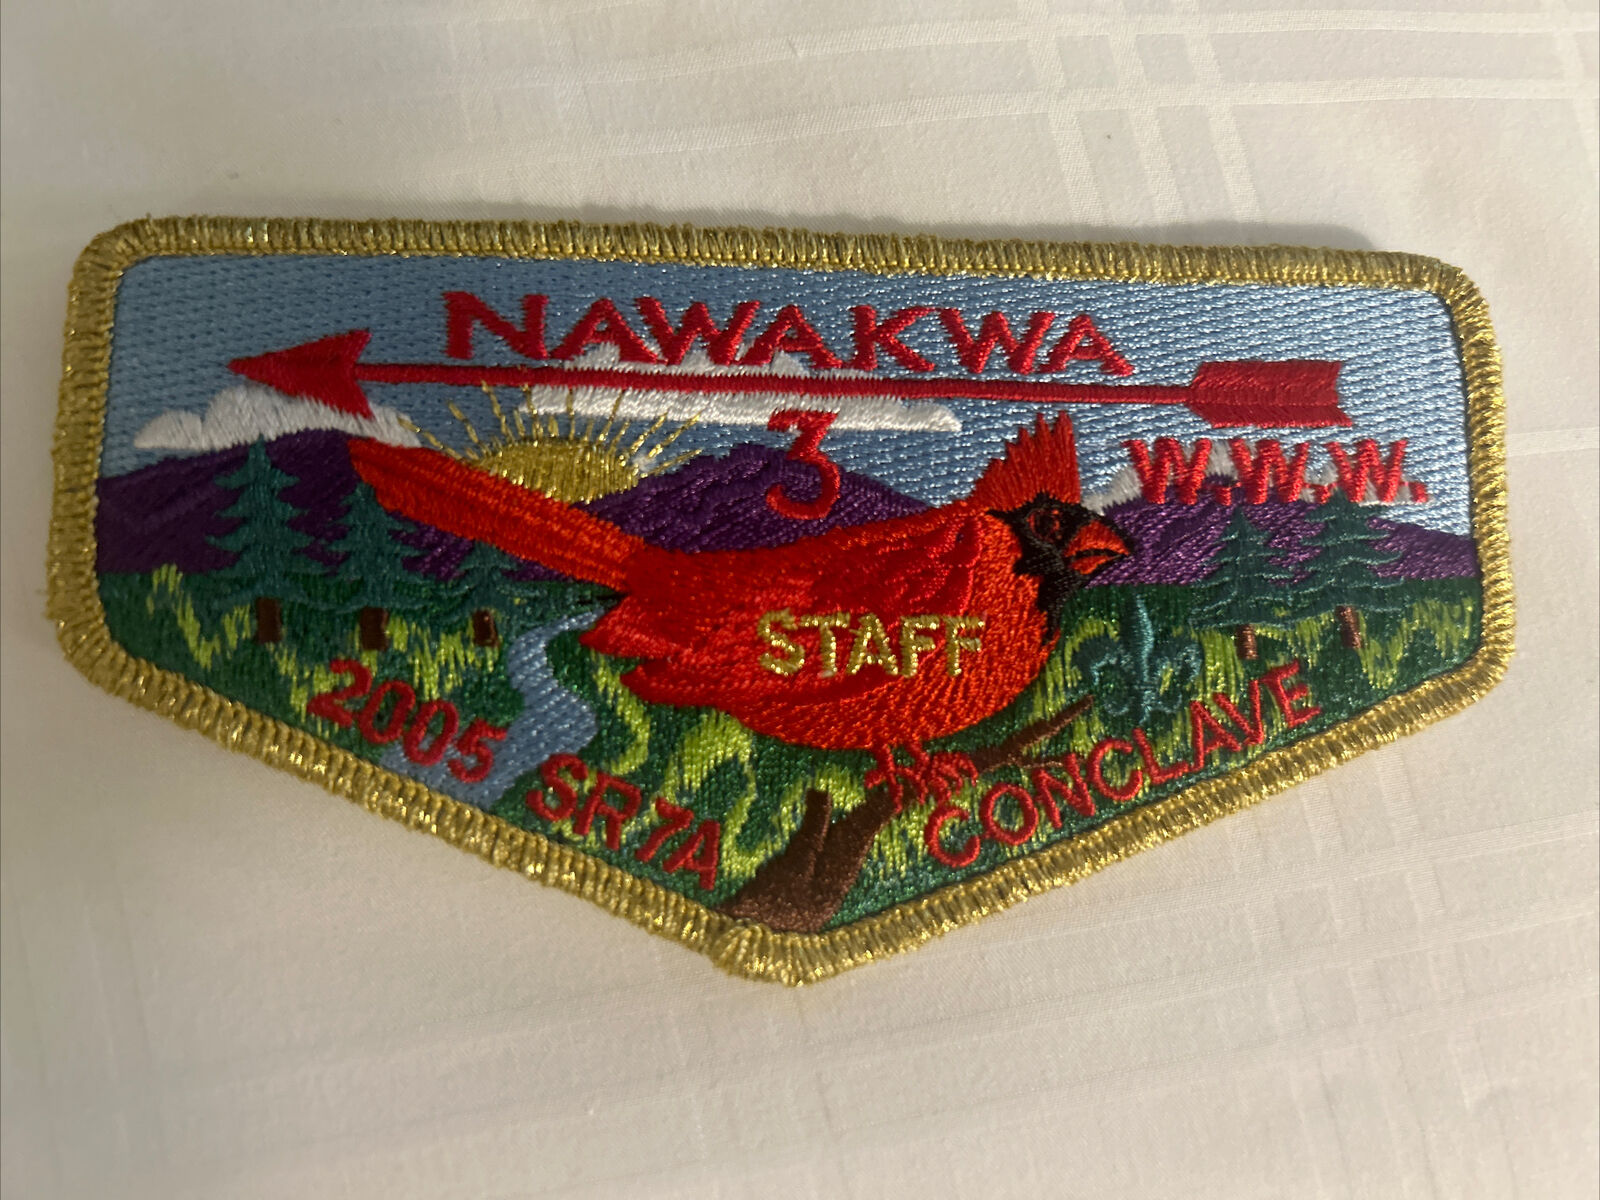 Mint OA Flap Lodge 3 Nawakwa GMY Border 2005 SR7A Conclave Staff S-93